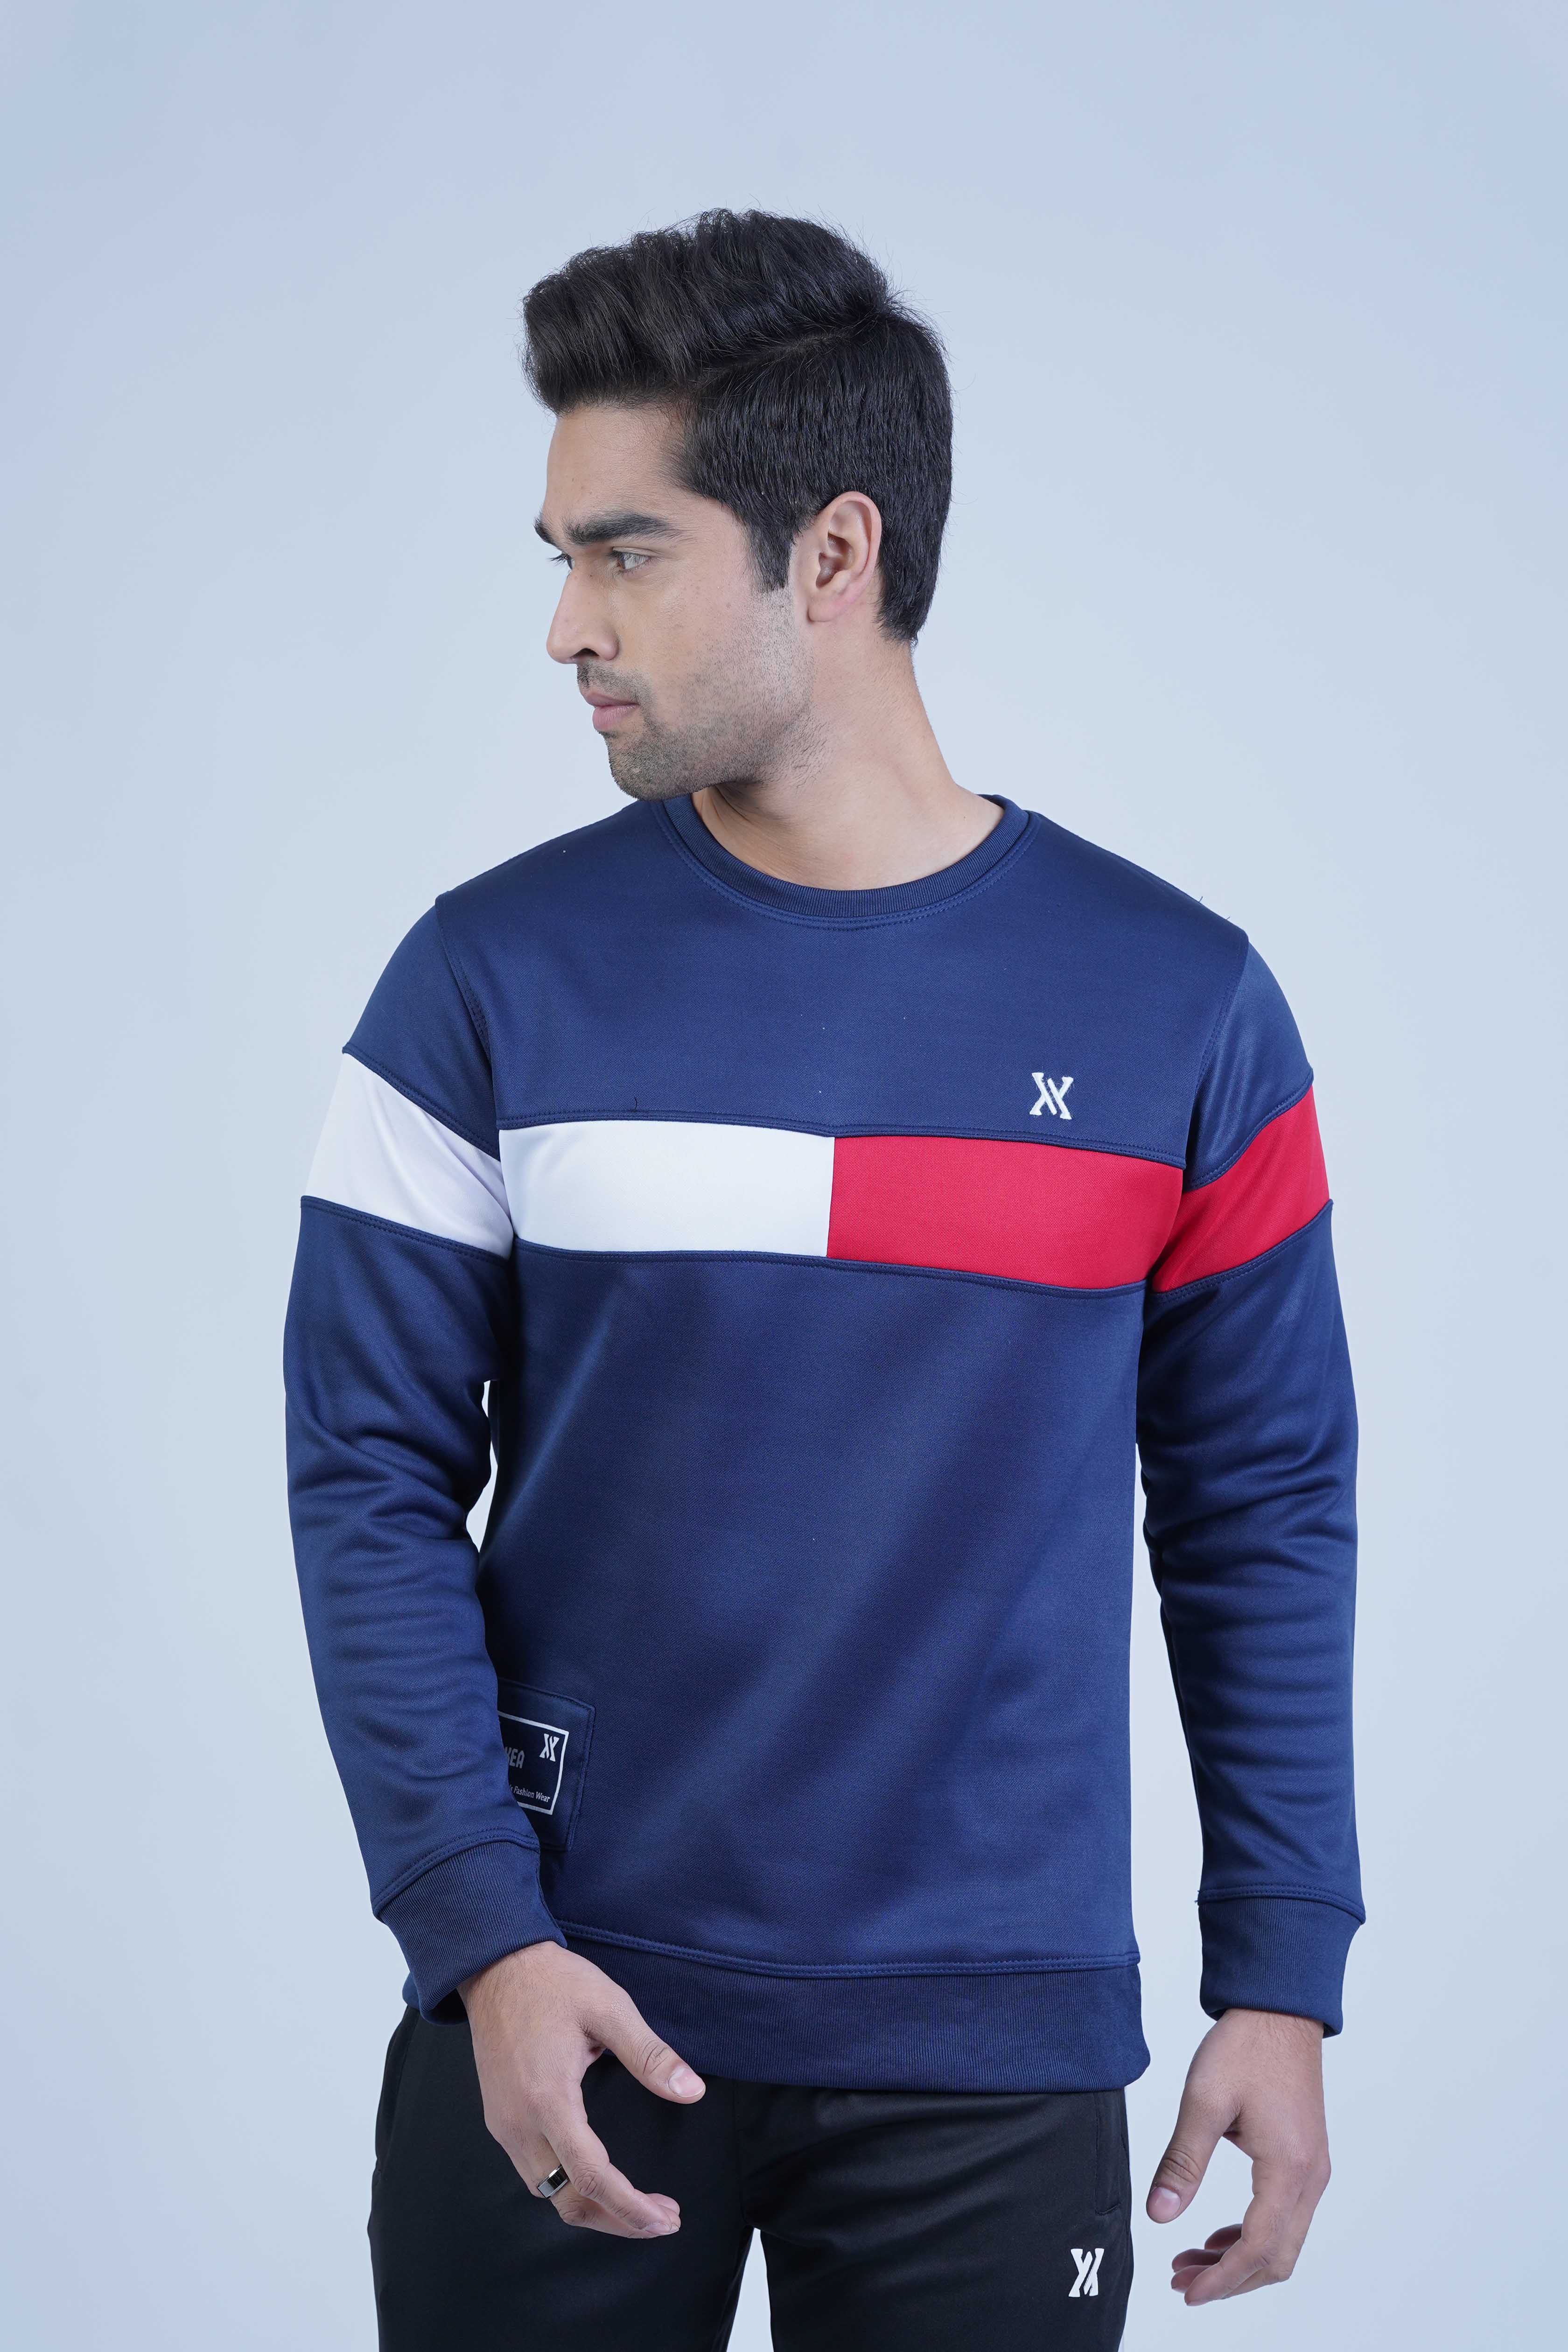 The Xea Men's Clothing: Urban Stripe Navy Blue Sweatshirt